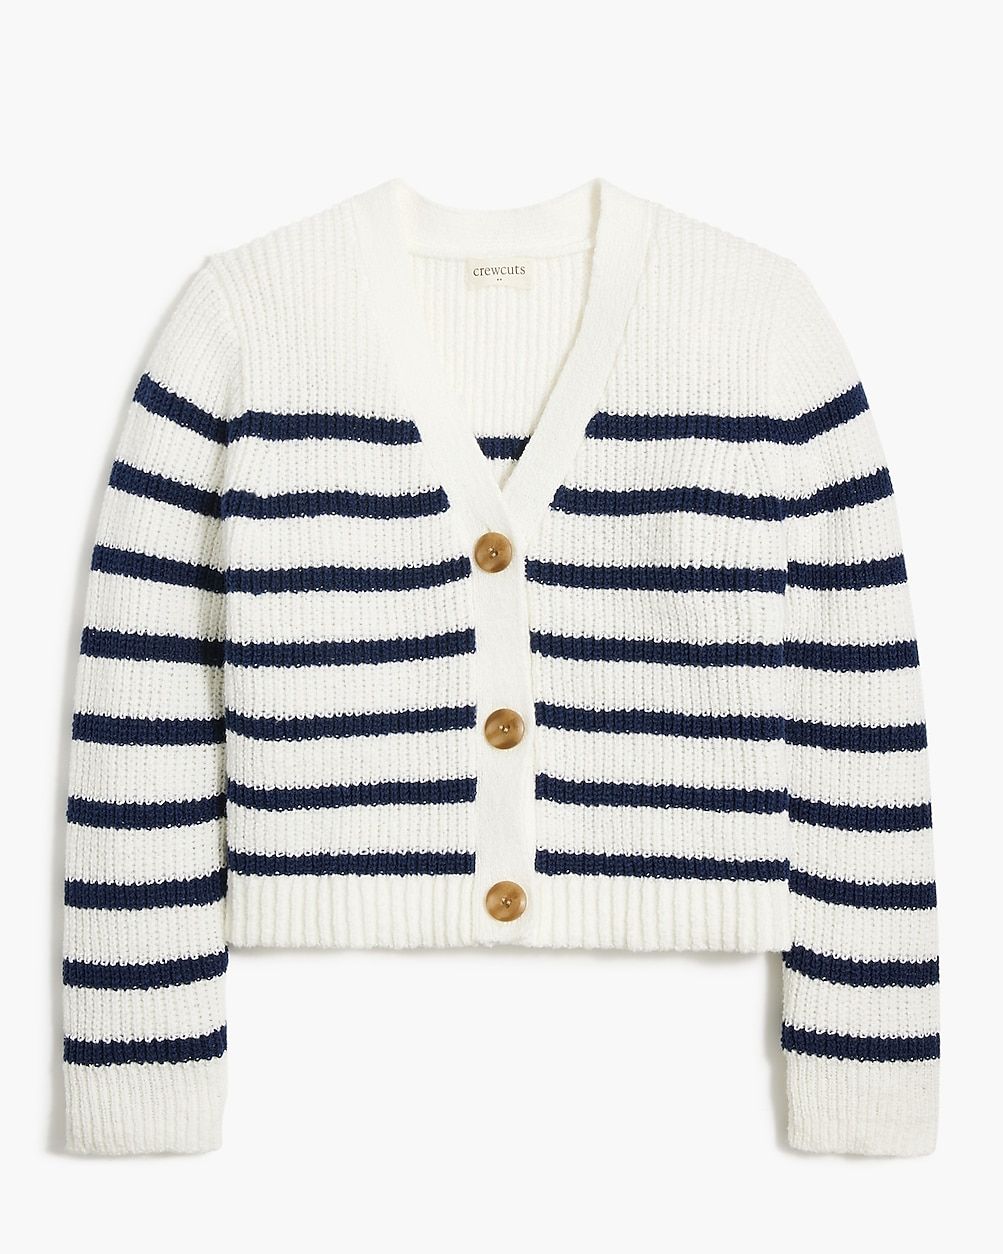 Girls' striped cardigan sweater | J.Crew Factory